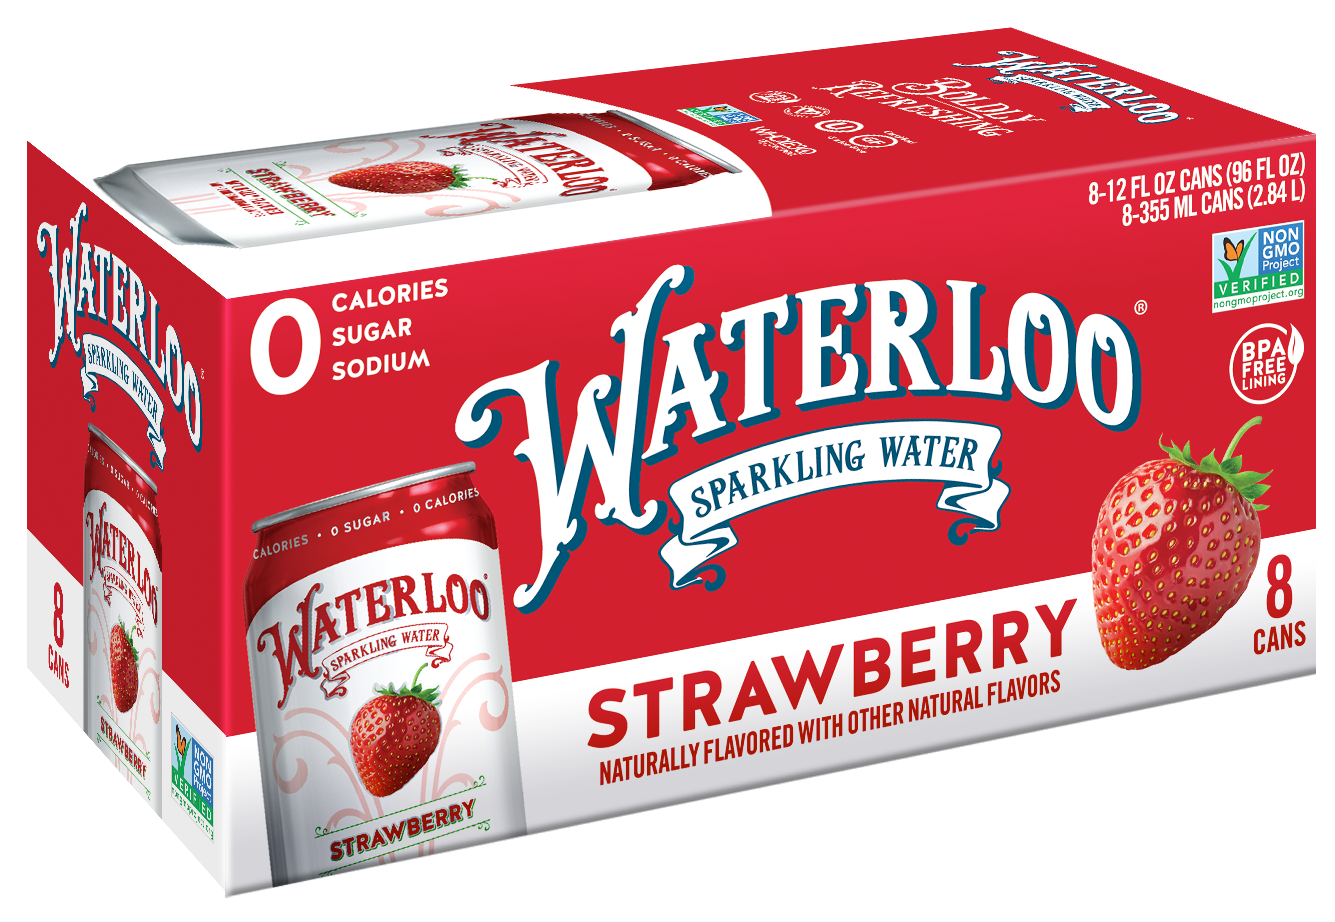 Waterloo Strawberry Sparkling Water 3 innerpacks per case 96.0 fl